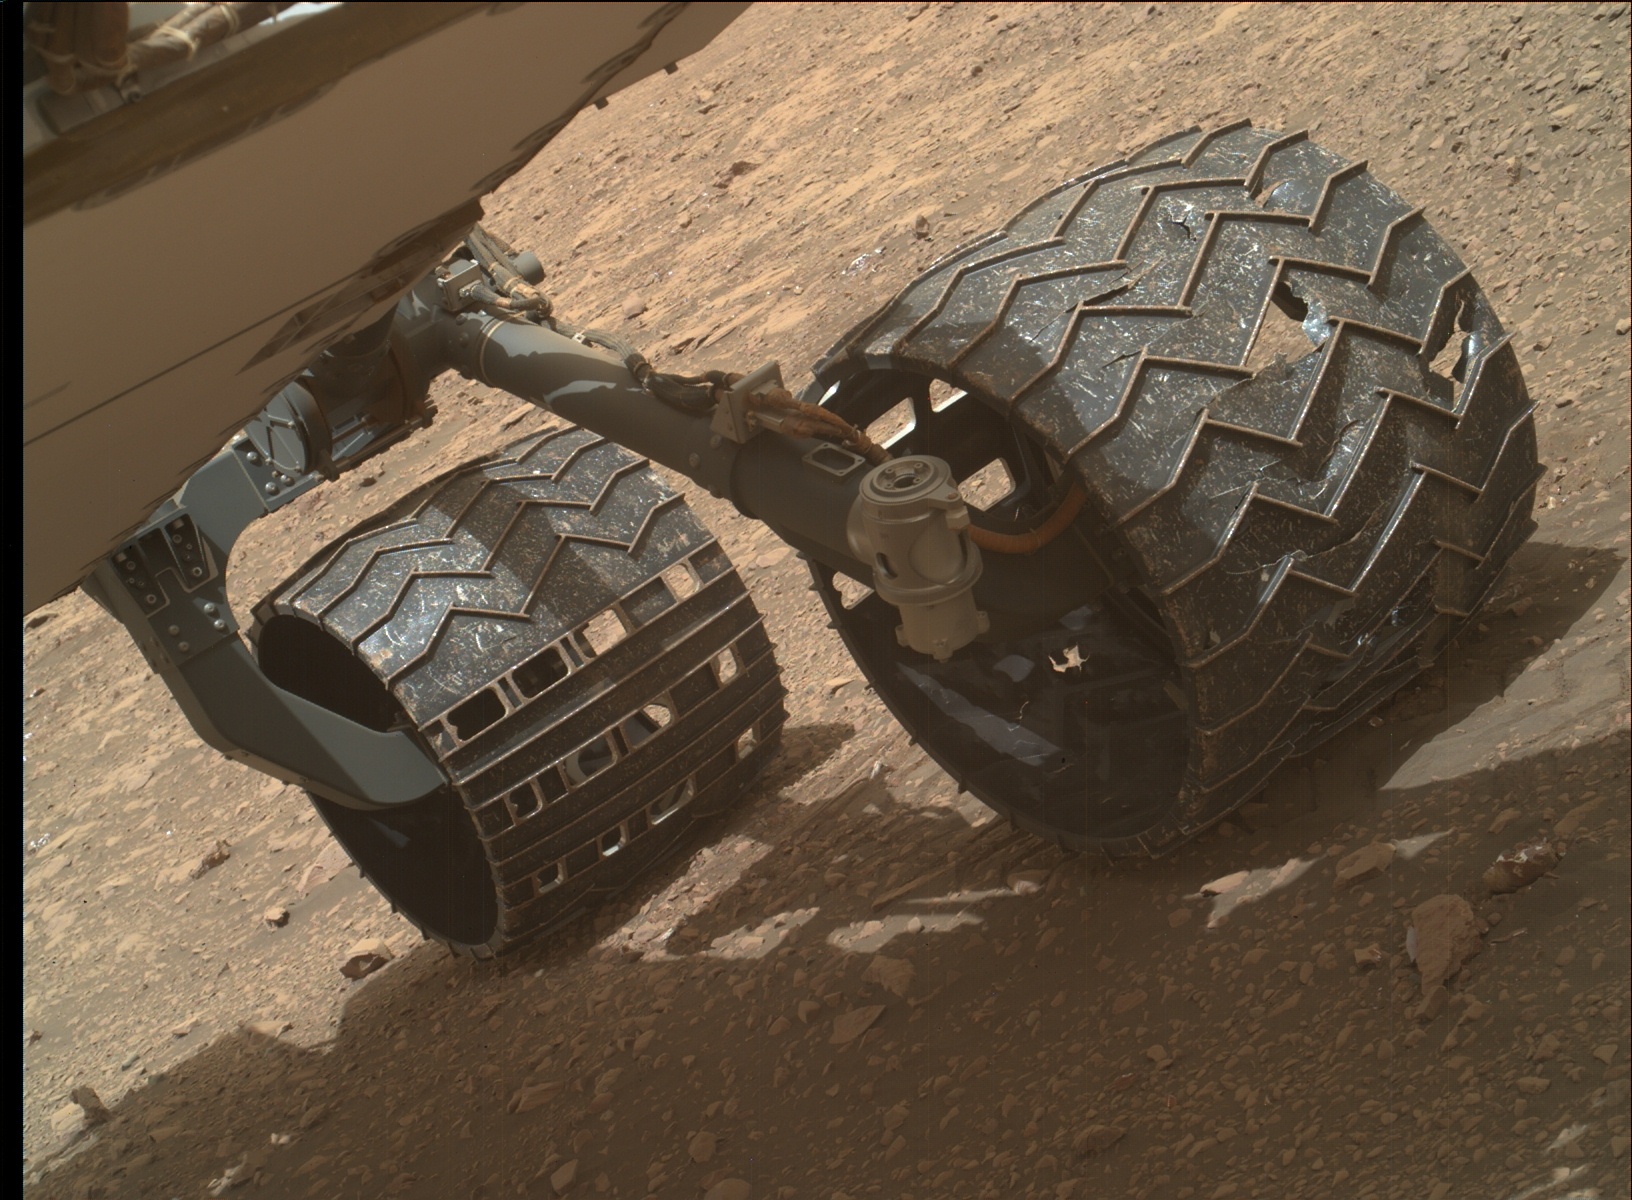 Sol 2032-2033: The Rocks vs. Stone Cold Aluminum Wheels